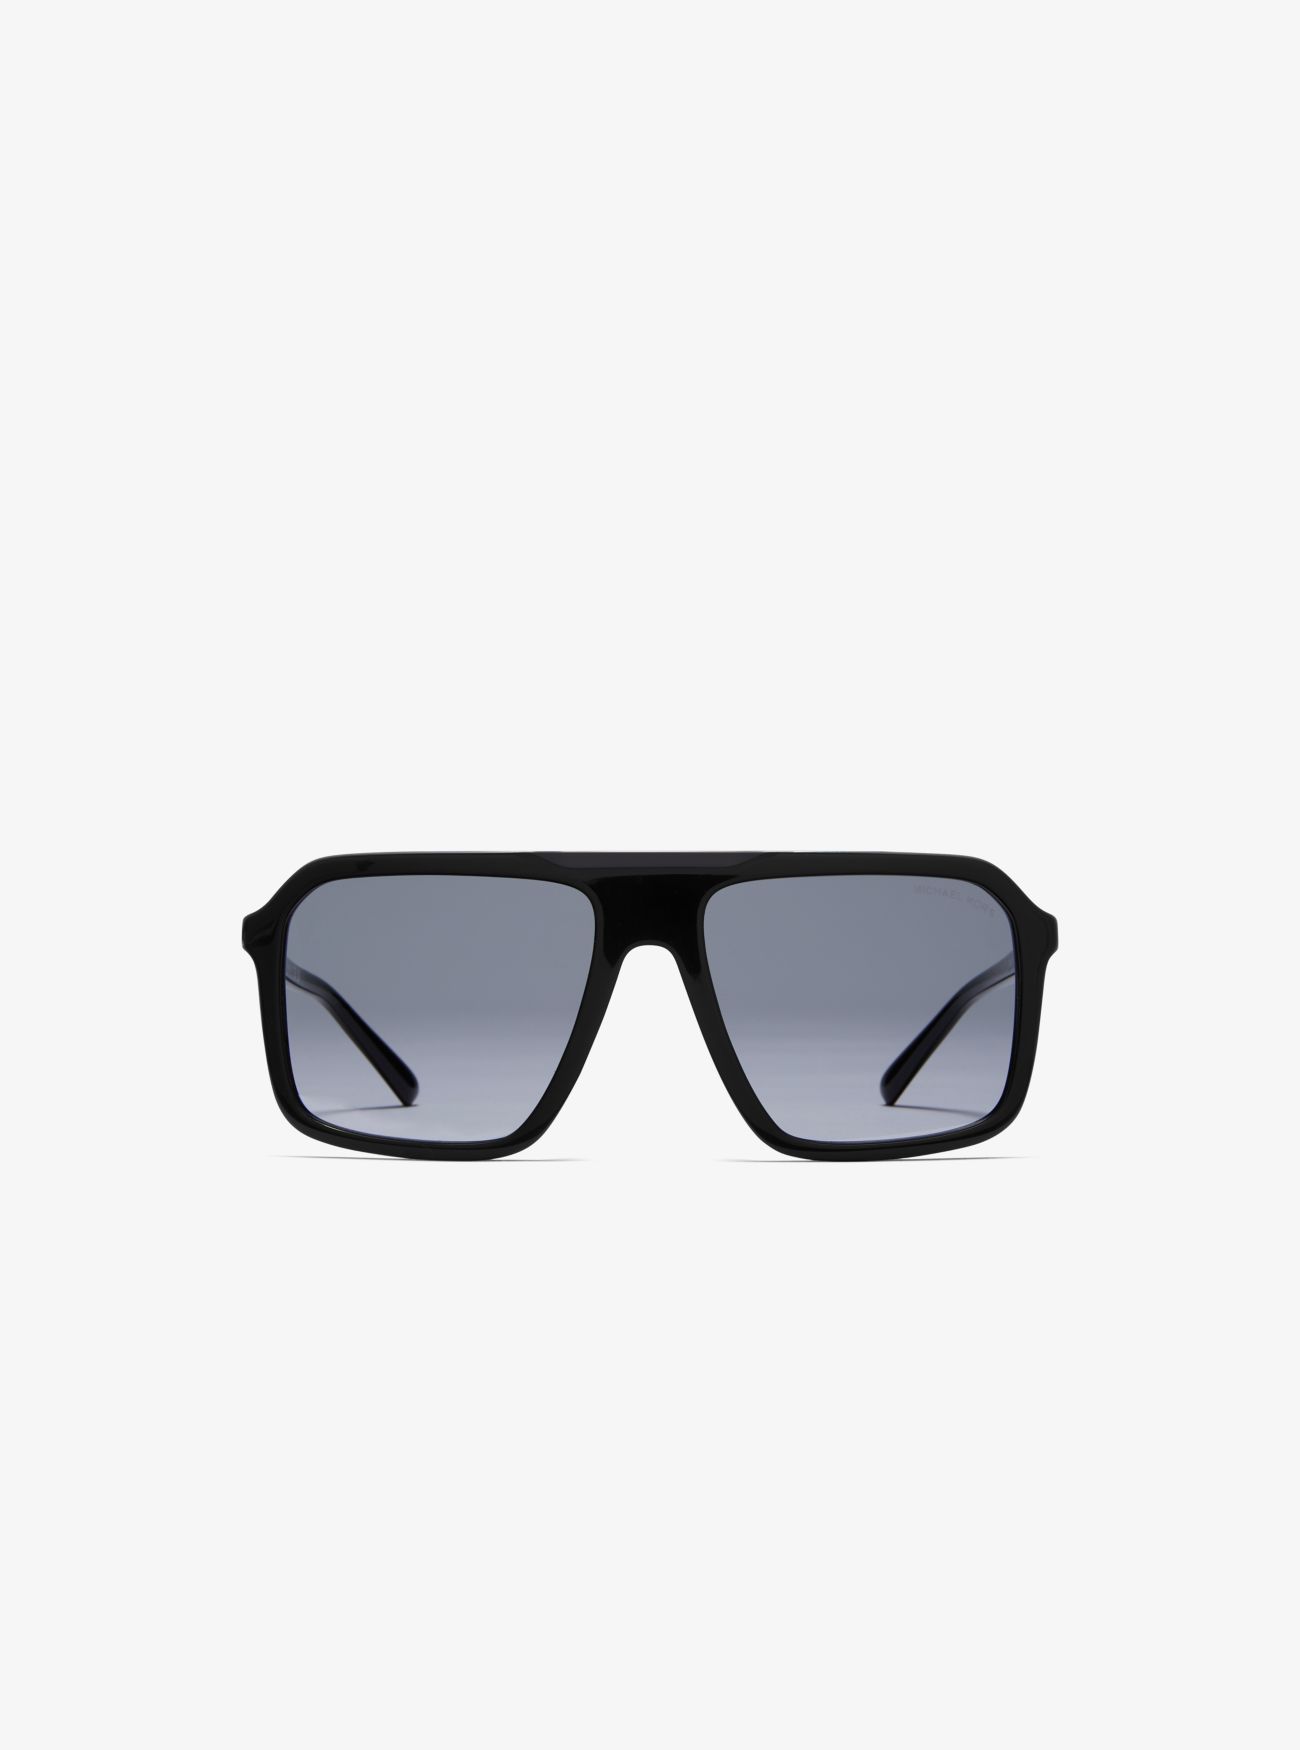 MK Murren Sunglasses - Black - Michael Kors